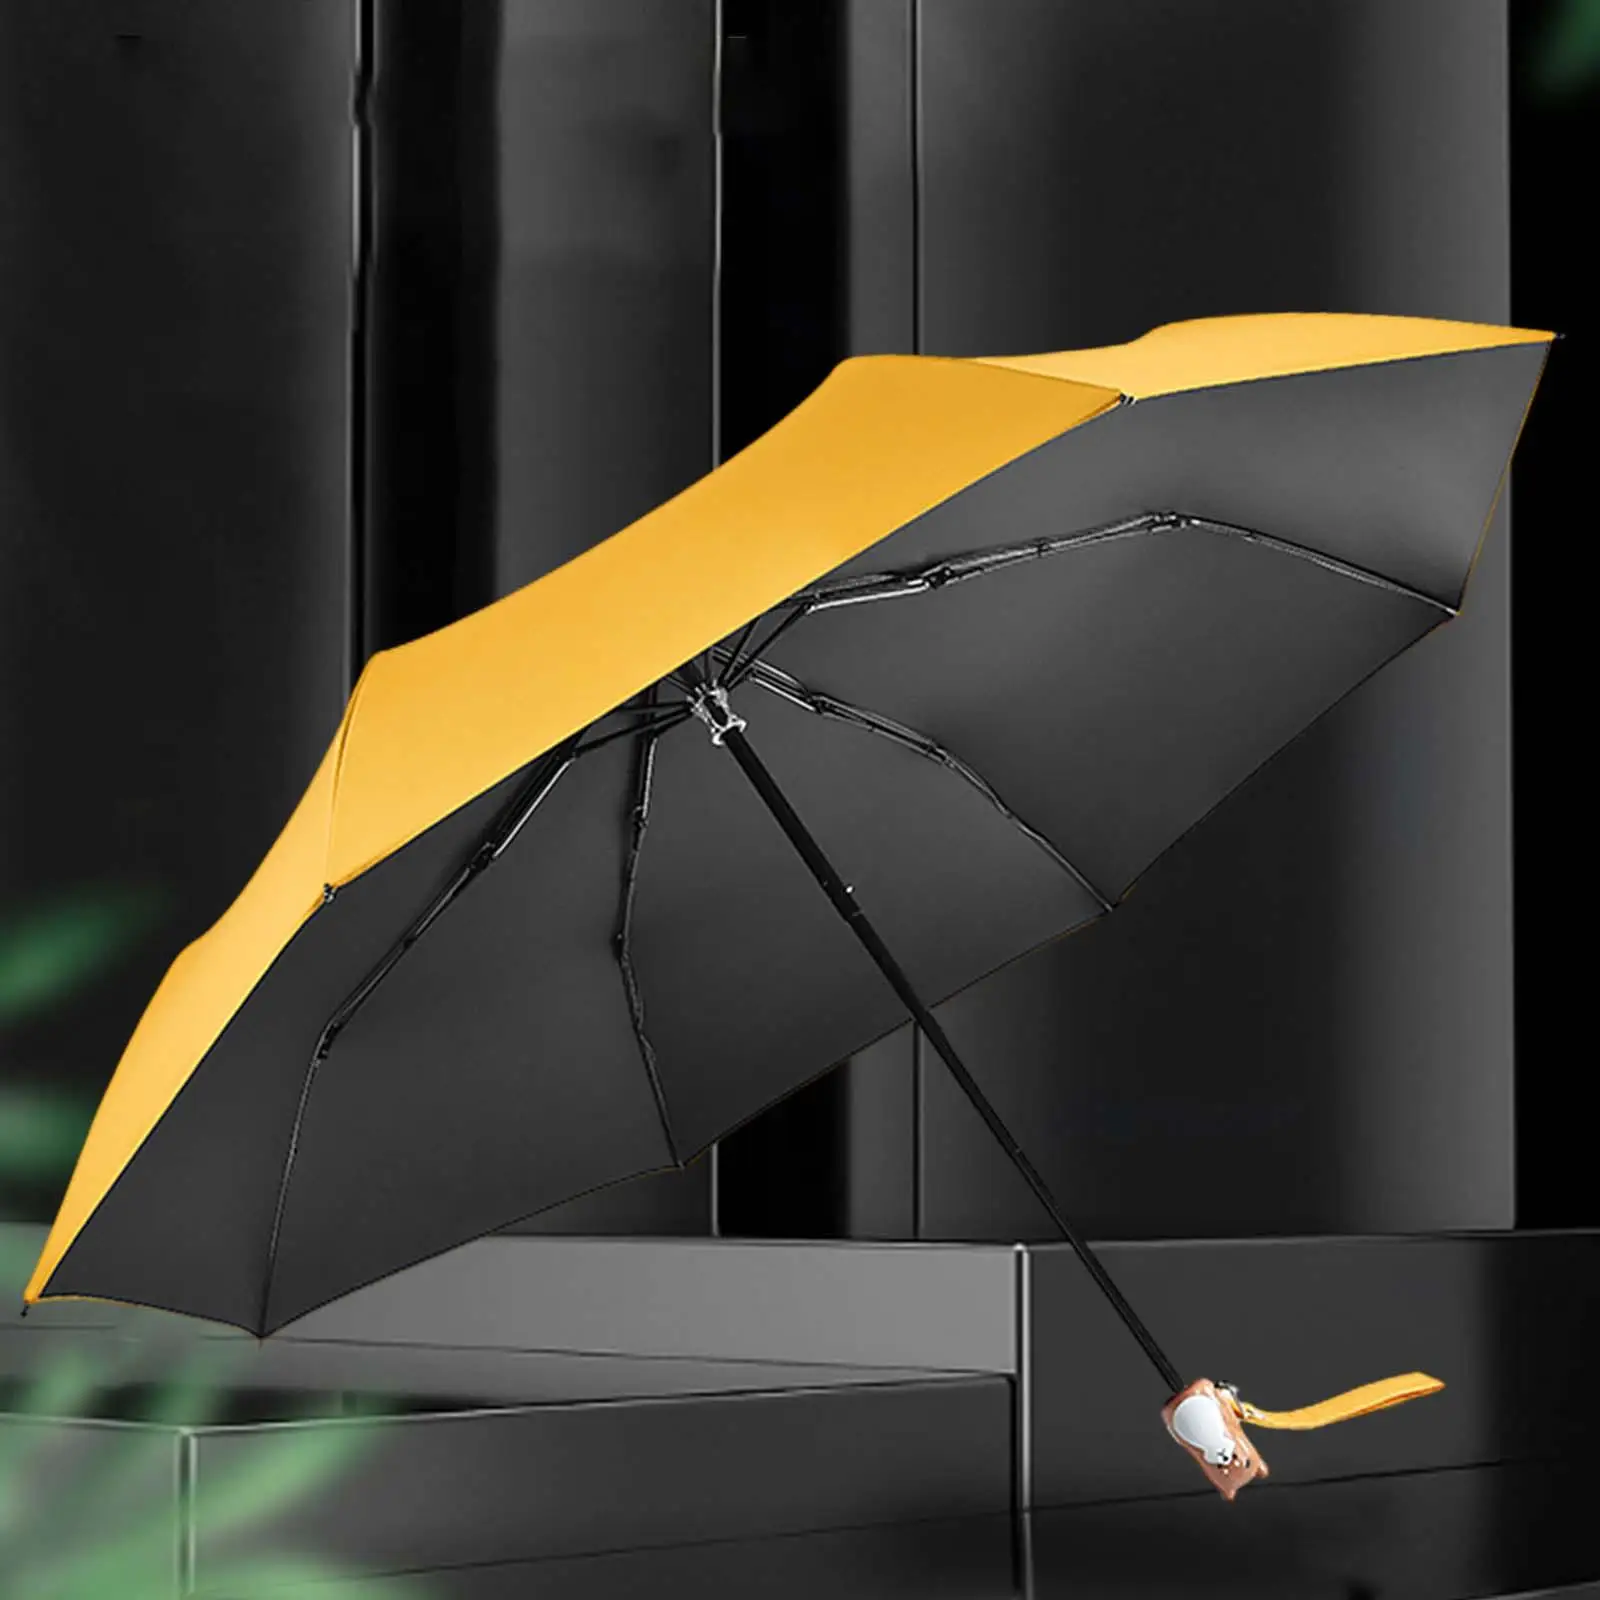 Travel Umbrella for Rain Compact Manual Packable Lightweight Simple Heavy Duty Sturdy Folding Umbrella Casual Umbrella